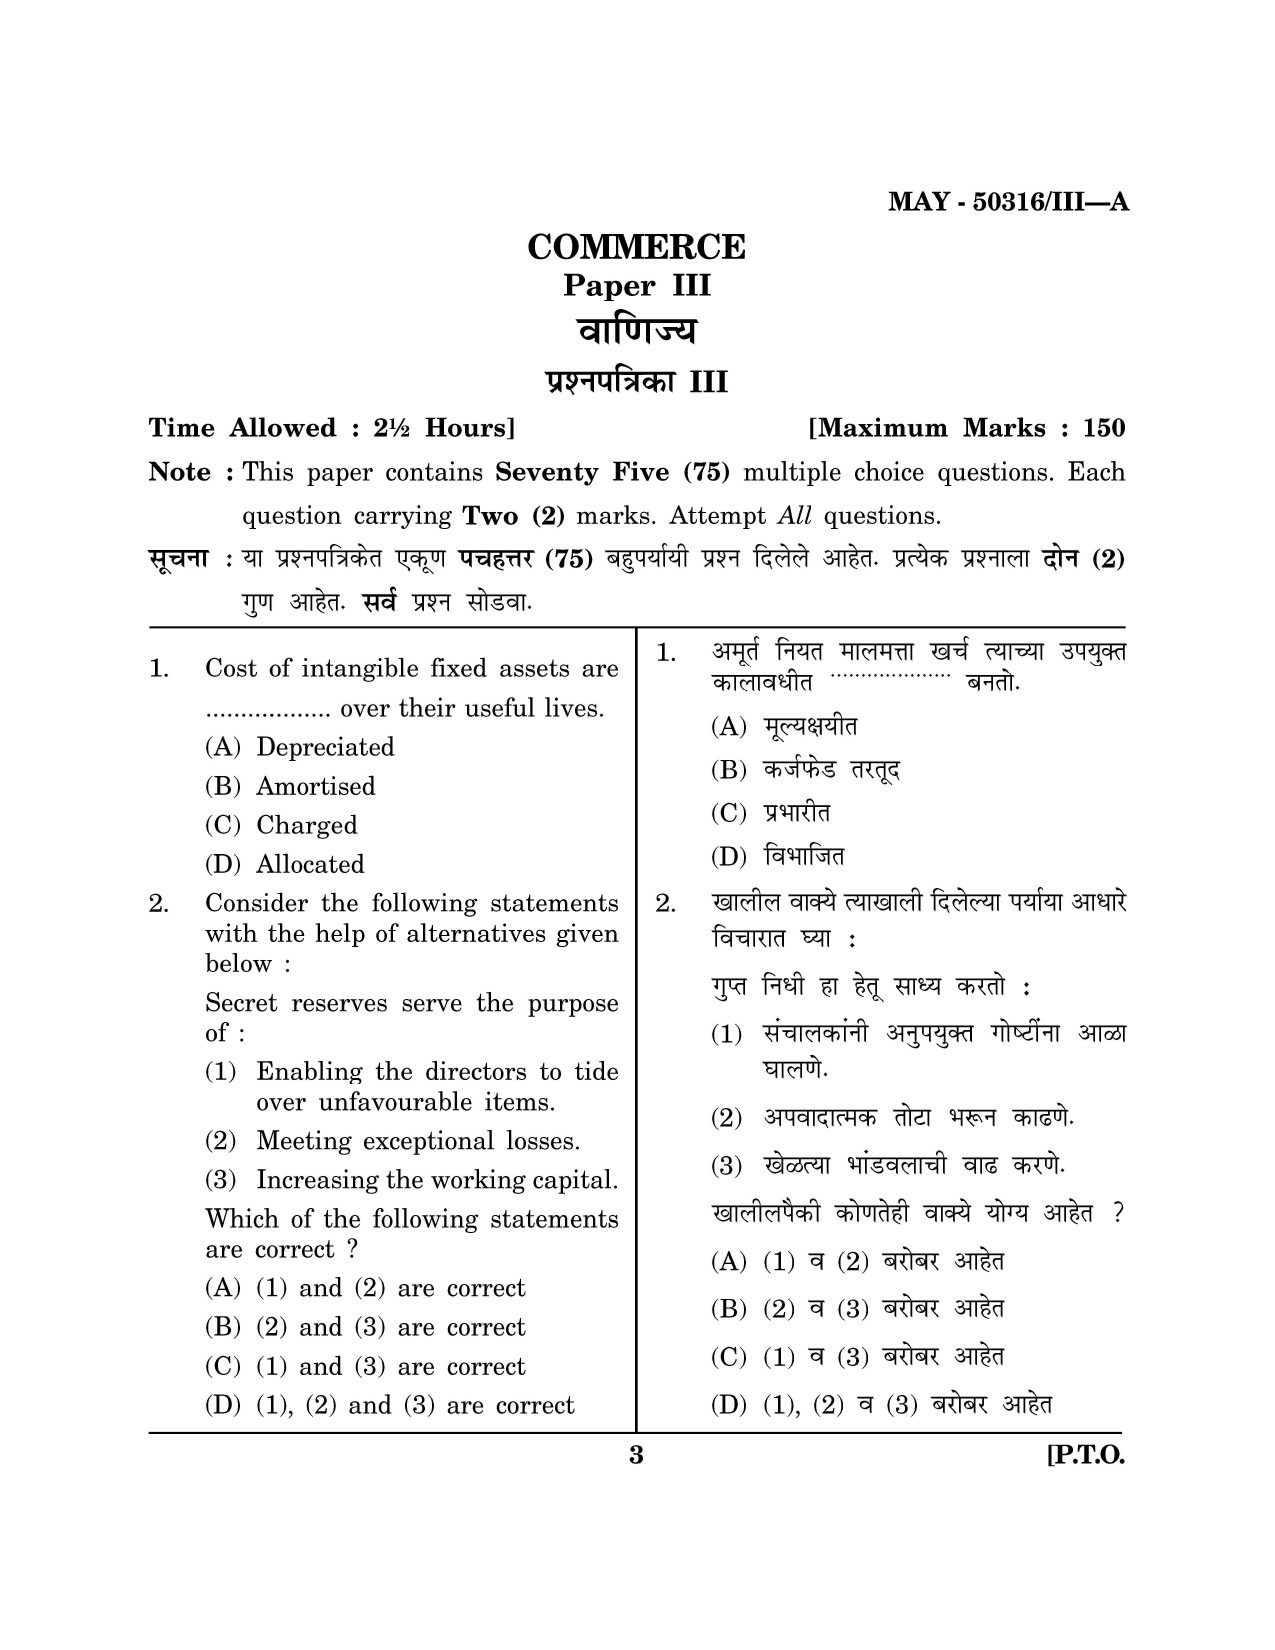 Maharashtra SET Commerce Question Paper III May 2016 2